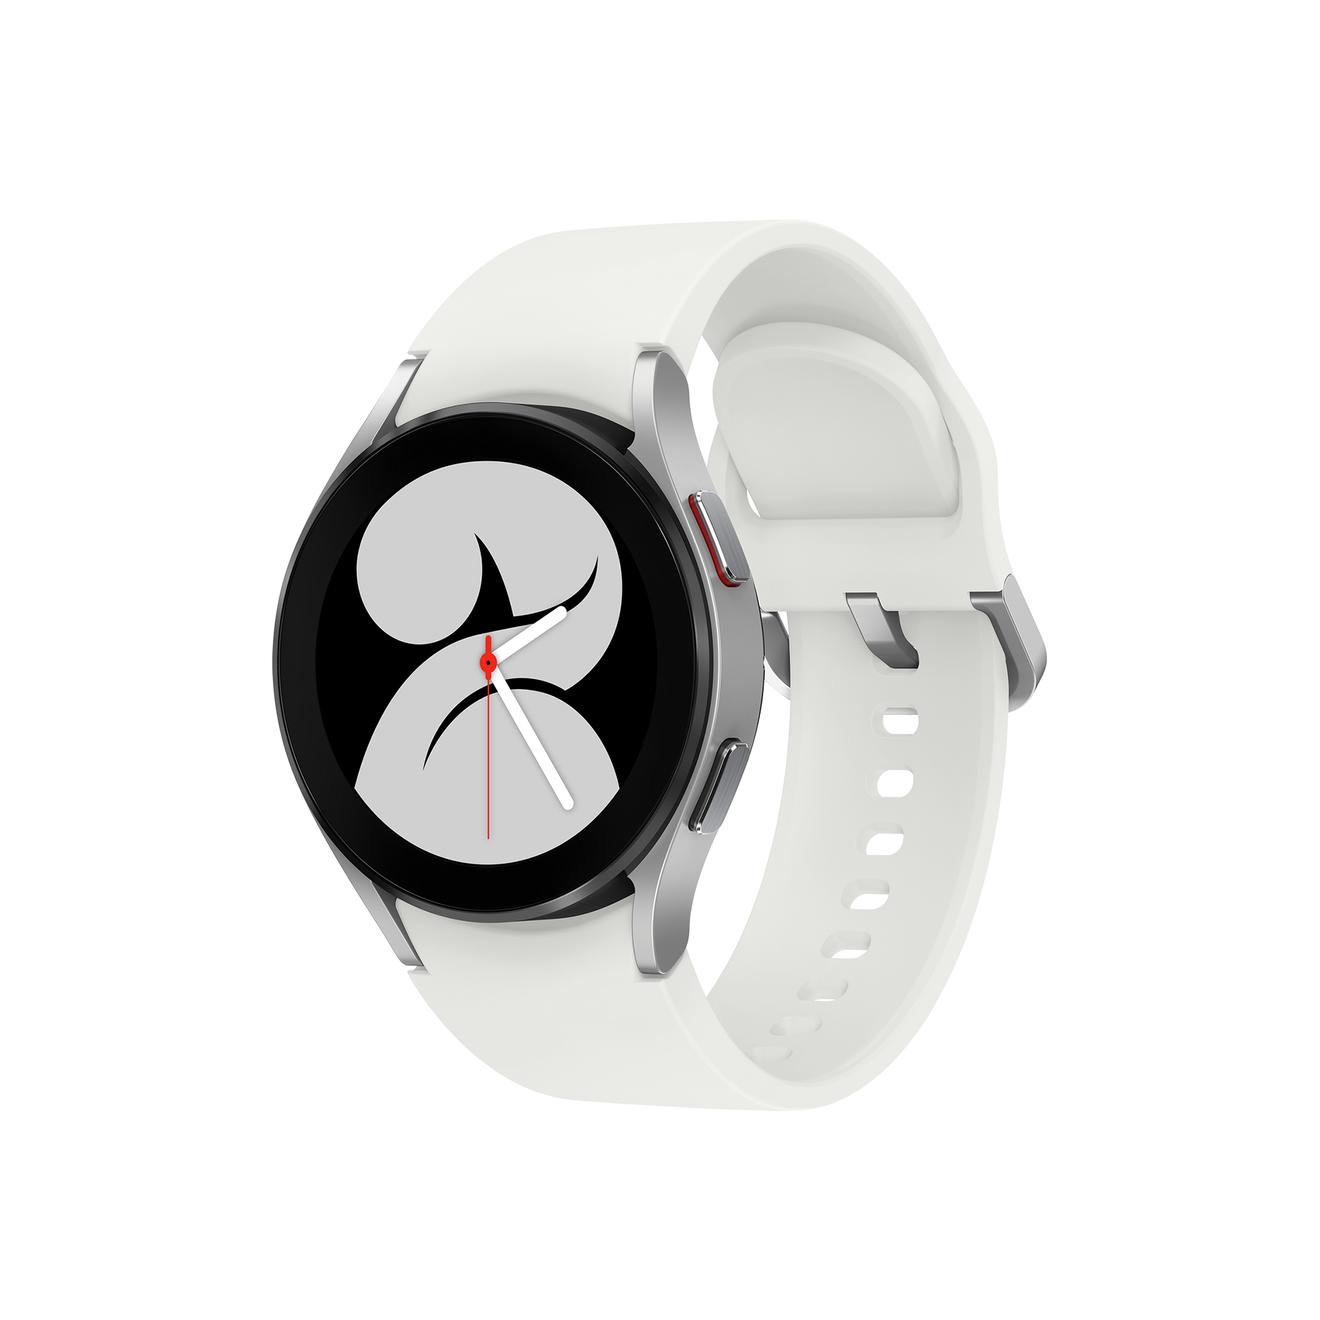 Offerta per Samsung - Galaxy Watch4 40mm Smartwatch Ghiera Touch Alluminio Memoria 16gb Silver a 129€ in Euronics